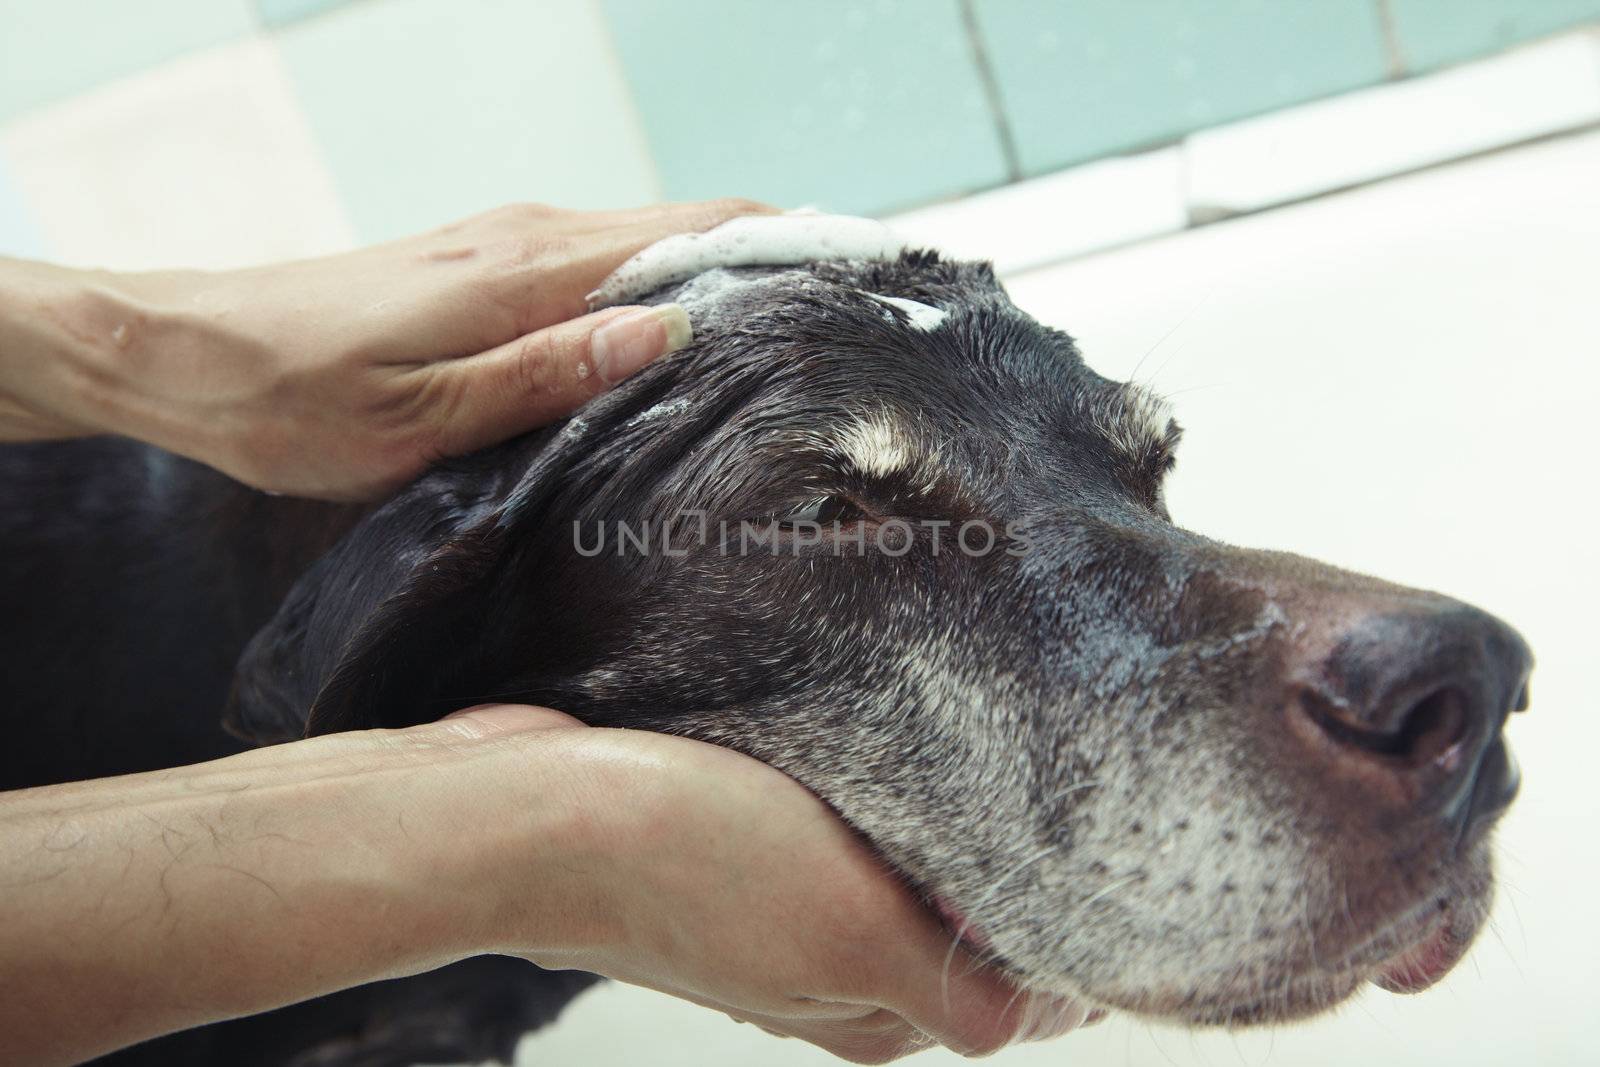 Human hand washing dog head in the bathroom. Close-up horizontal photo